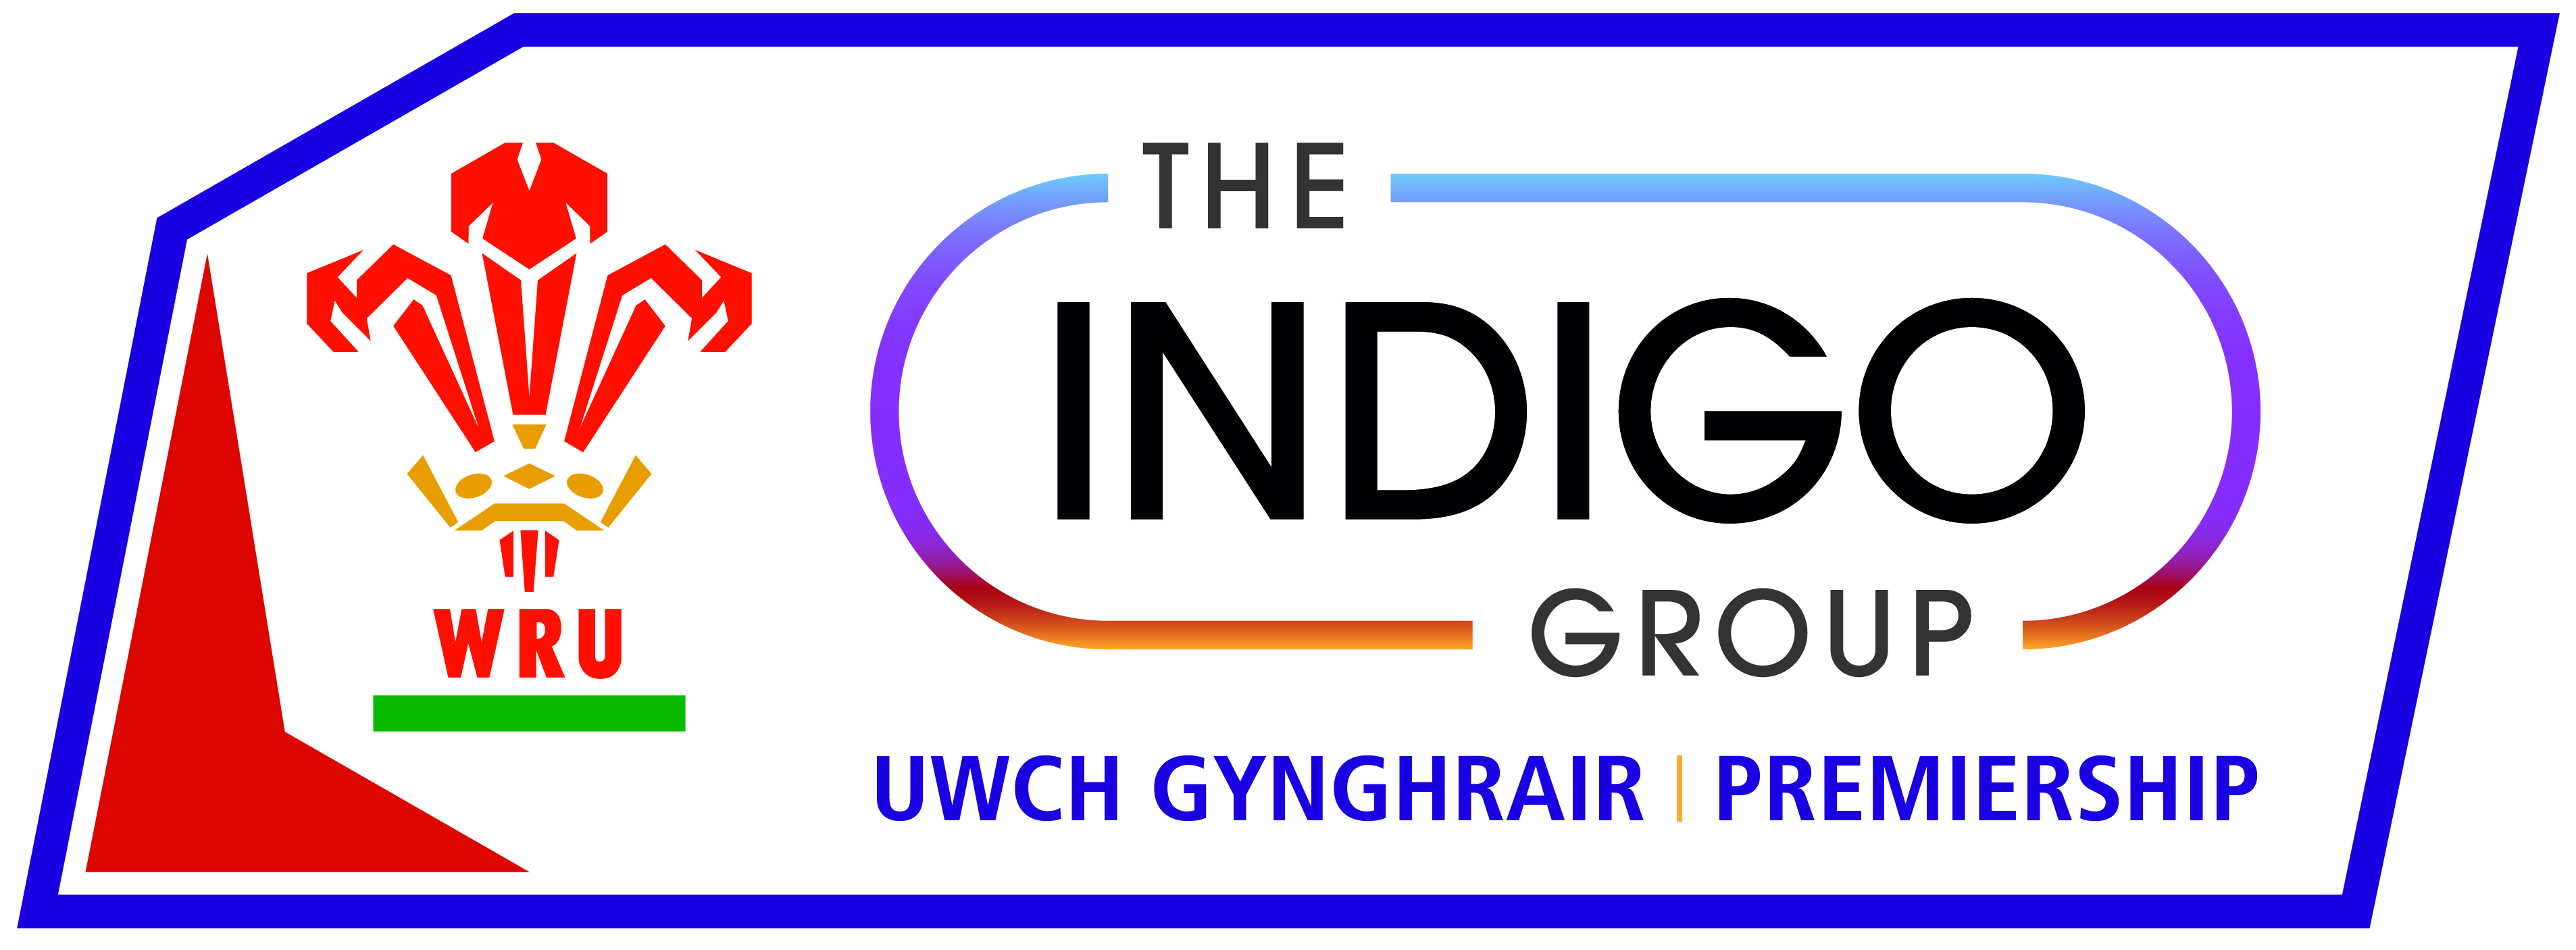 Indigo Group Premiership Fixtures Released